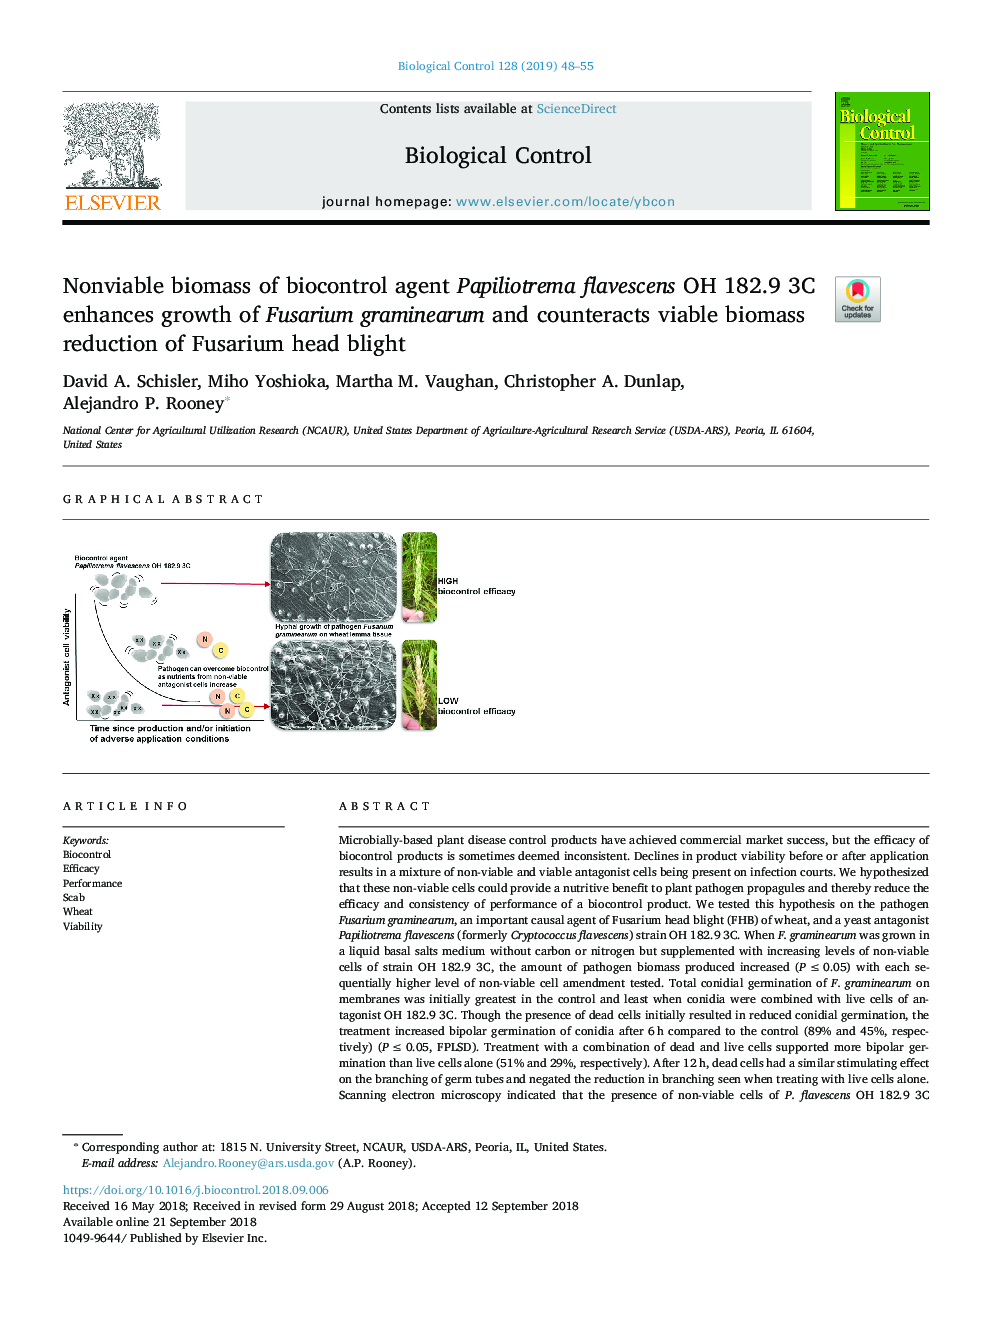 Nonviable biomass of biocontrol agent Papiliotrema flavescens OH 182.9 3C enhances growth of Fusarium graminearum and counteracts viable biomass reduction of Fusarium head blight